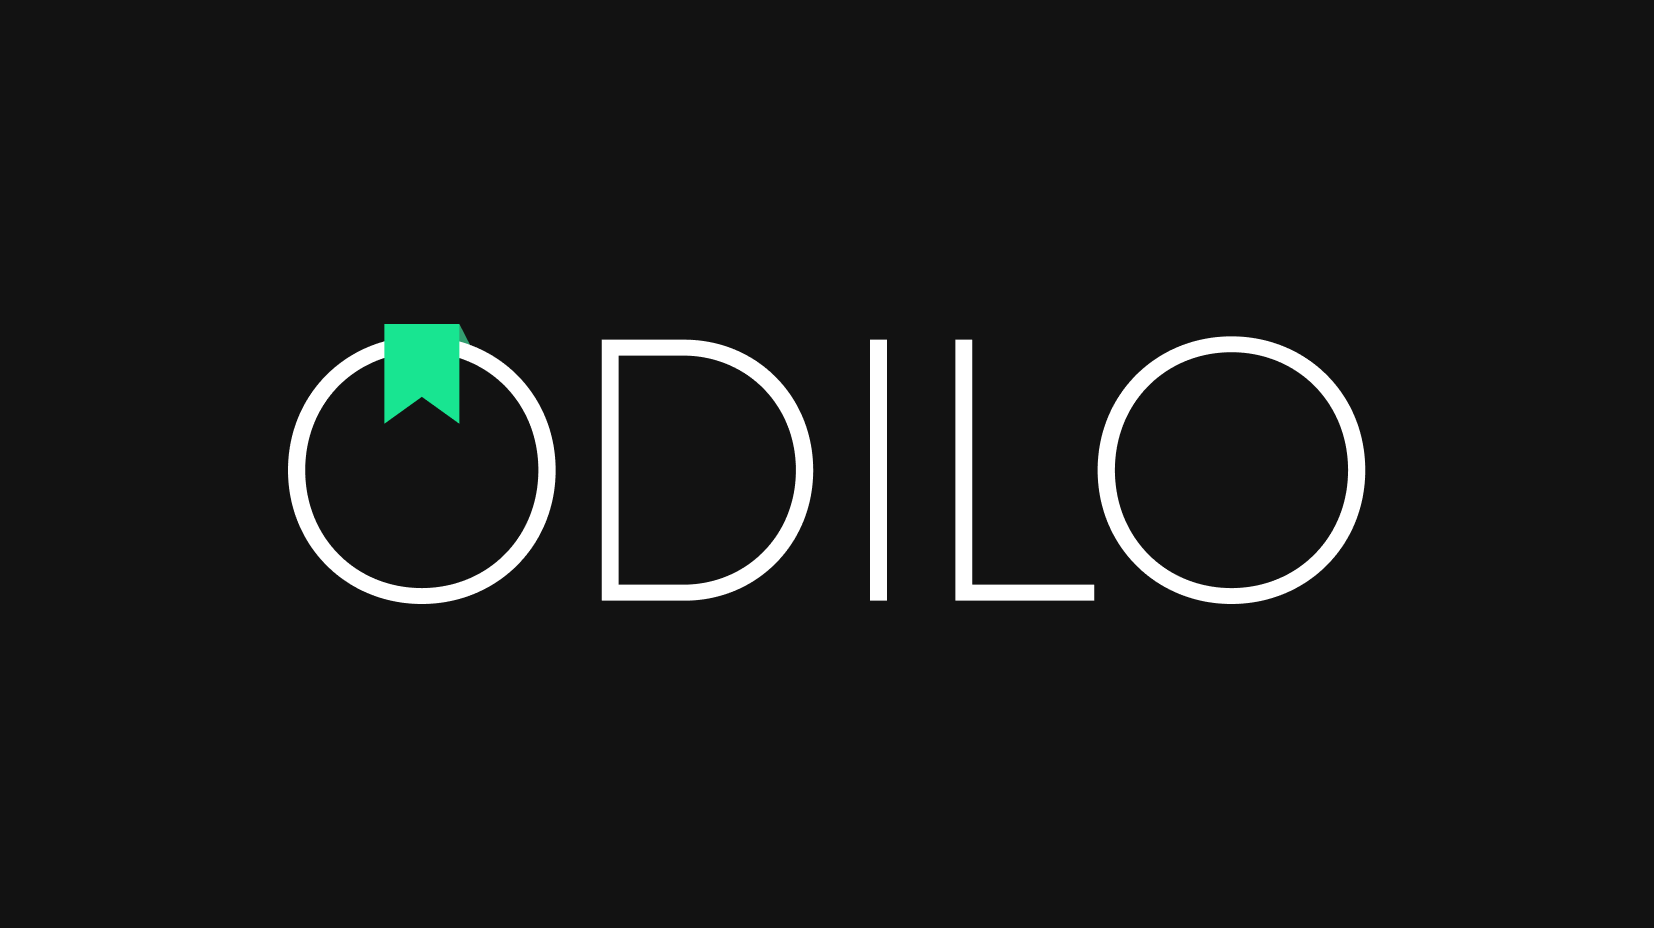 Tech & Product DD | Growth | Code & Co. advises Bregal Milestone on Odilo